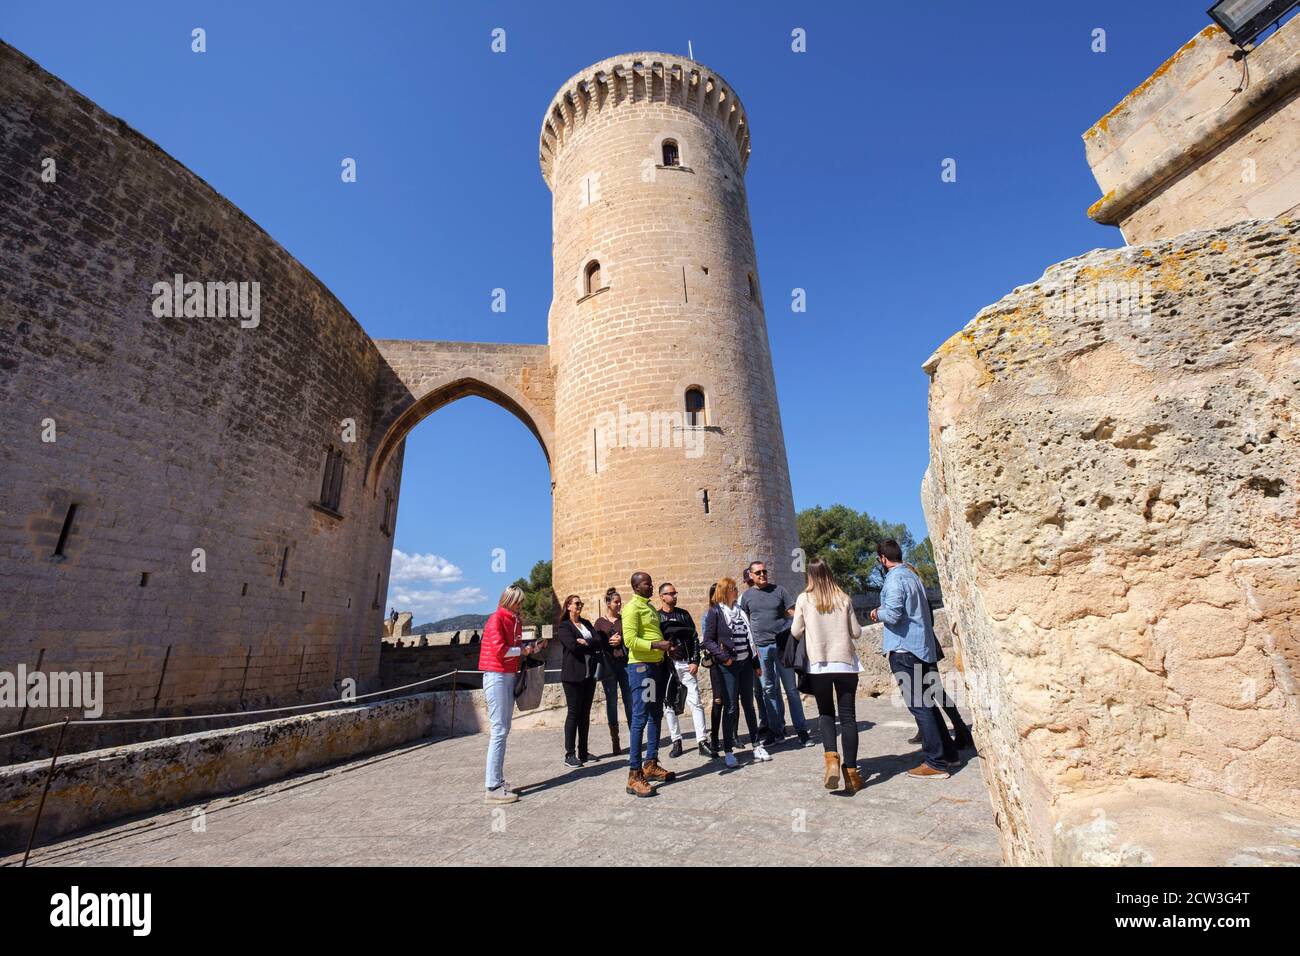 Torre del Homenaje, castillo de Bellver, siglo XIV, estilo gótico, Mallorca, balearic islands, Spain Stock Photo